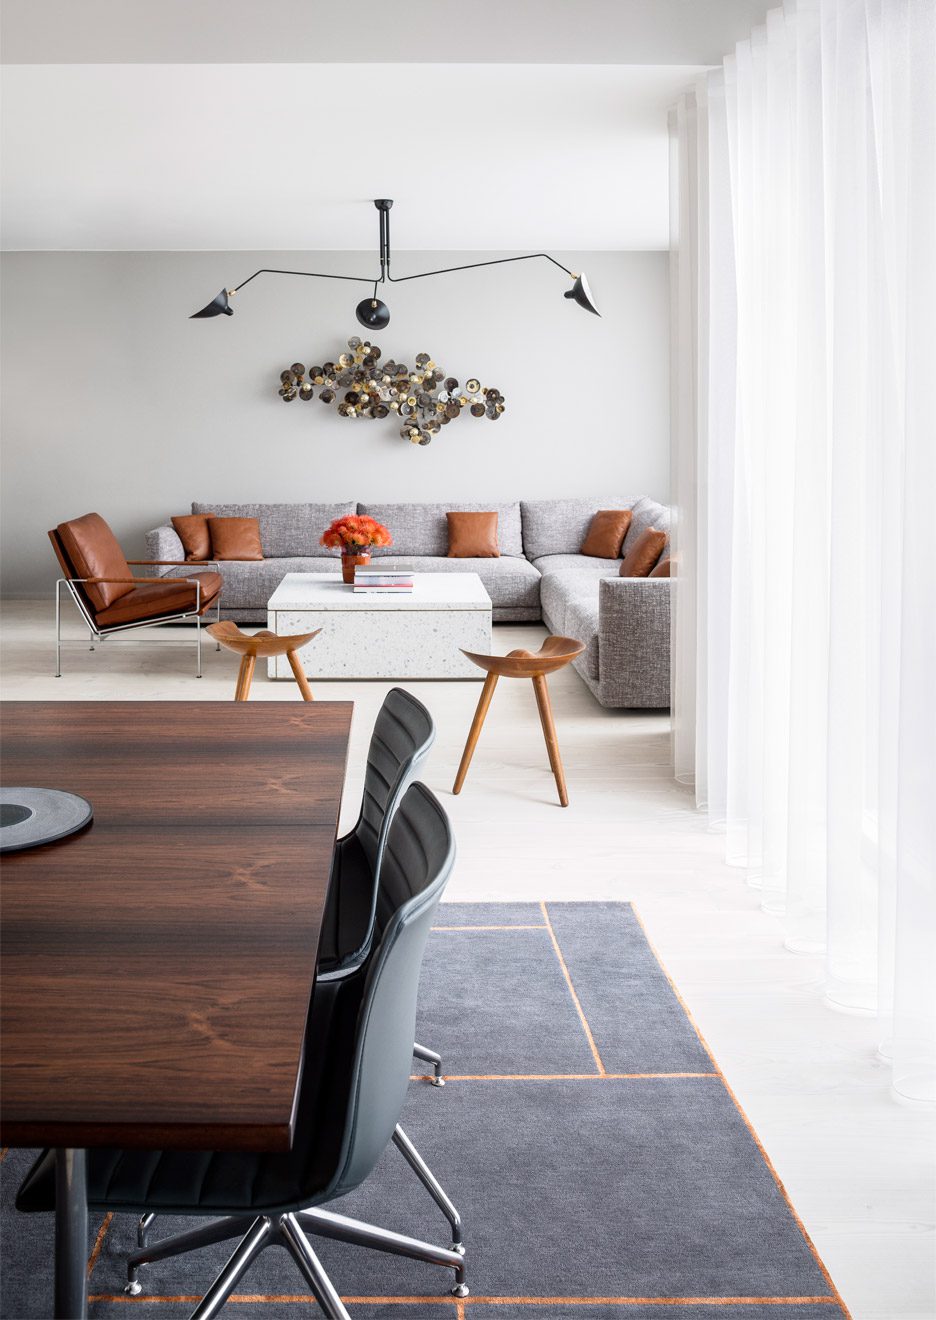 kroyers-plads-apartment-studio-david-thulstrup-interior-architecture-copenhagen-denmark-avoid-scandinavian-furniture-modern-_dezeen_936_9